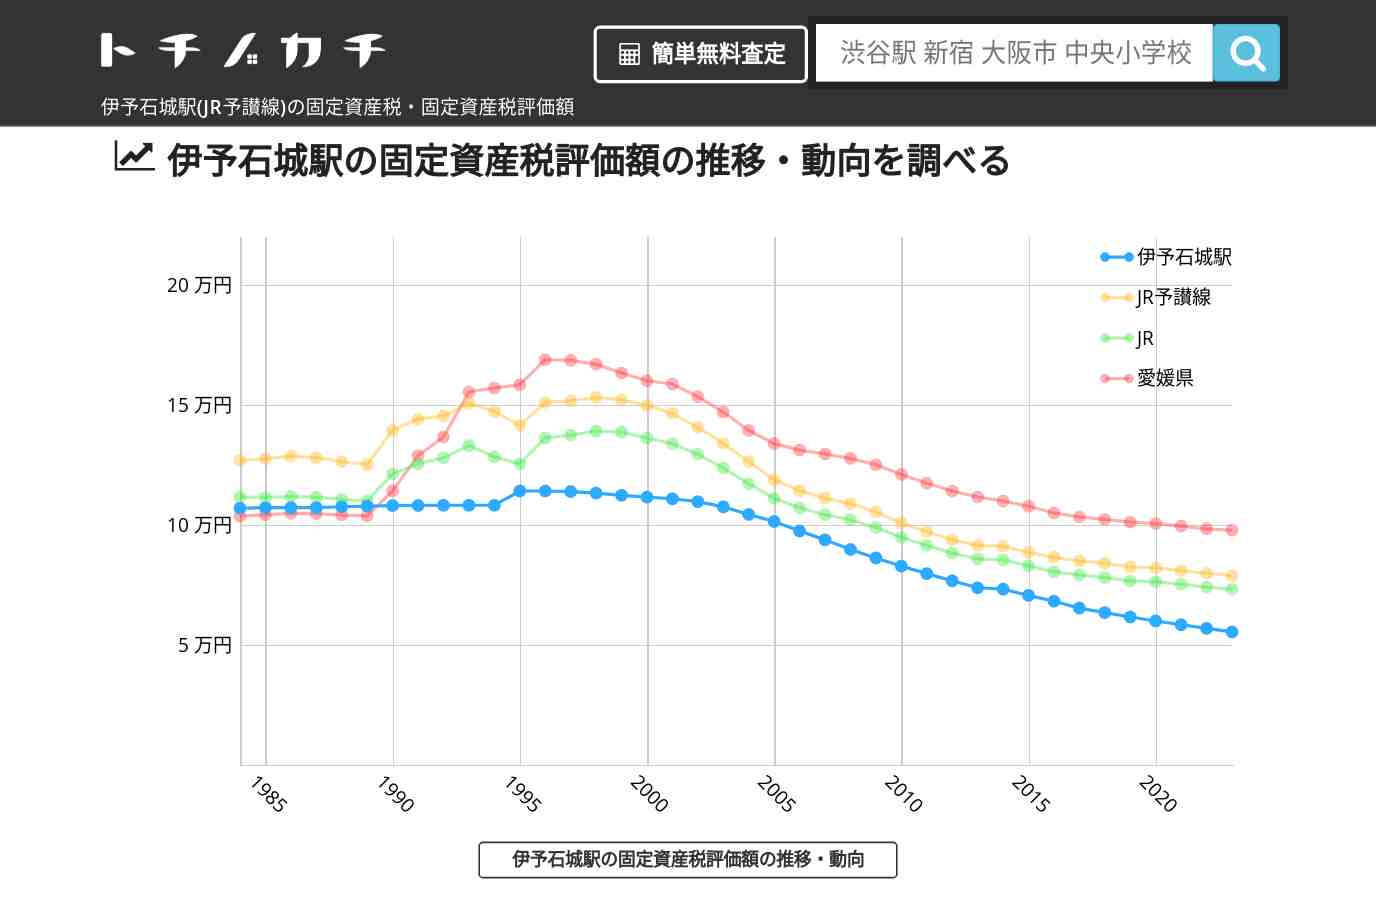 伊予石城駅(JR予讃線)の固定資産税・固定資産税評価額 | トチノカチ